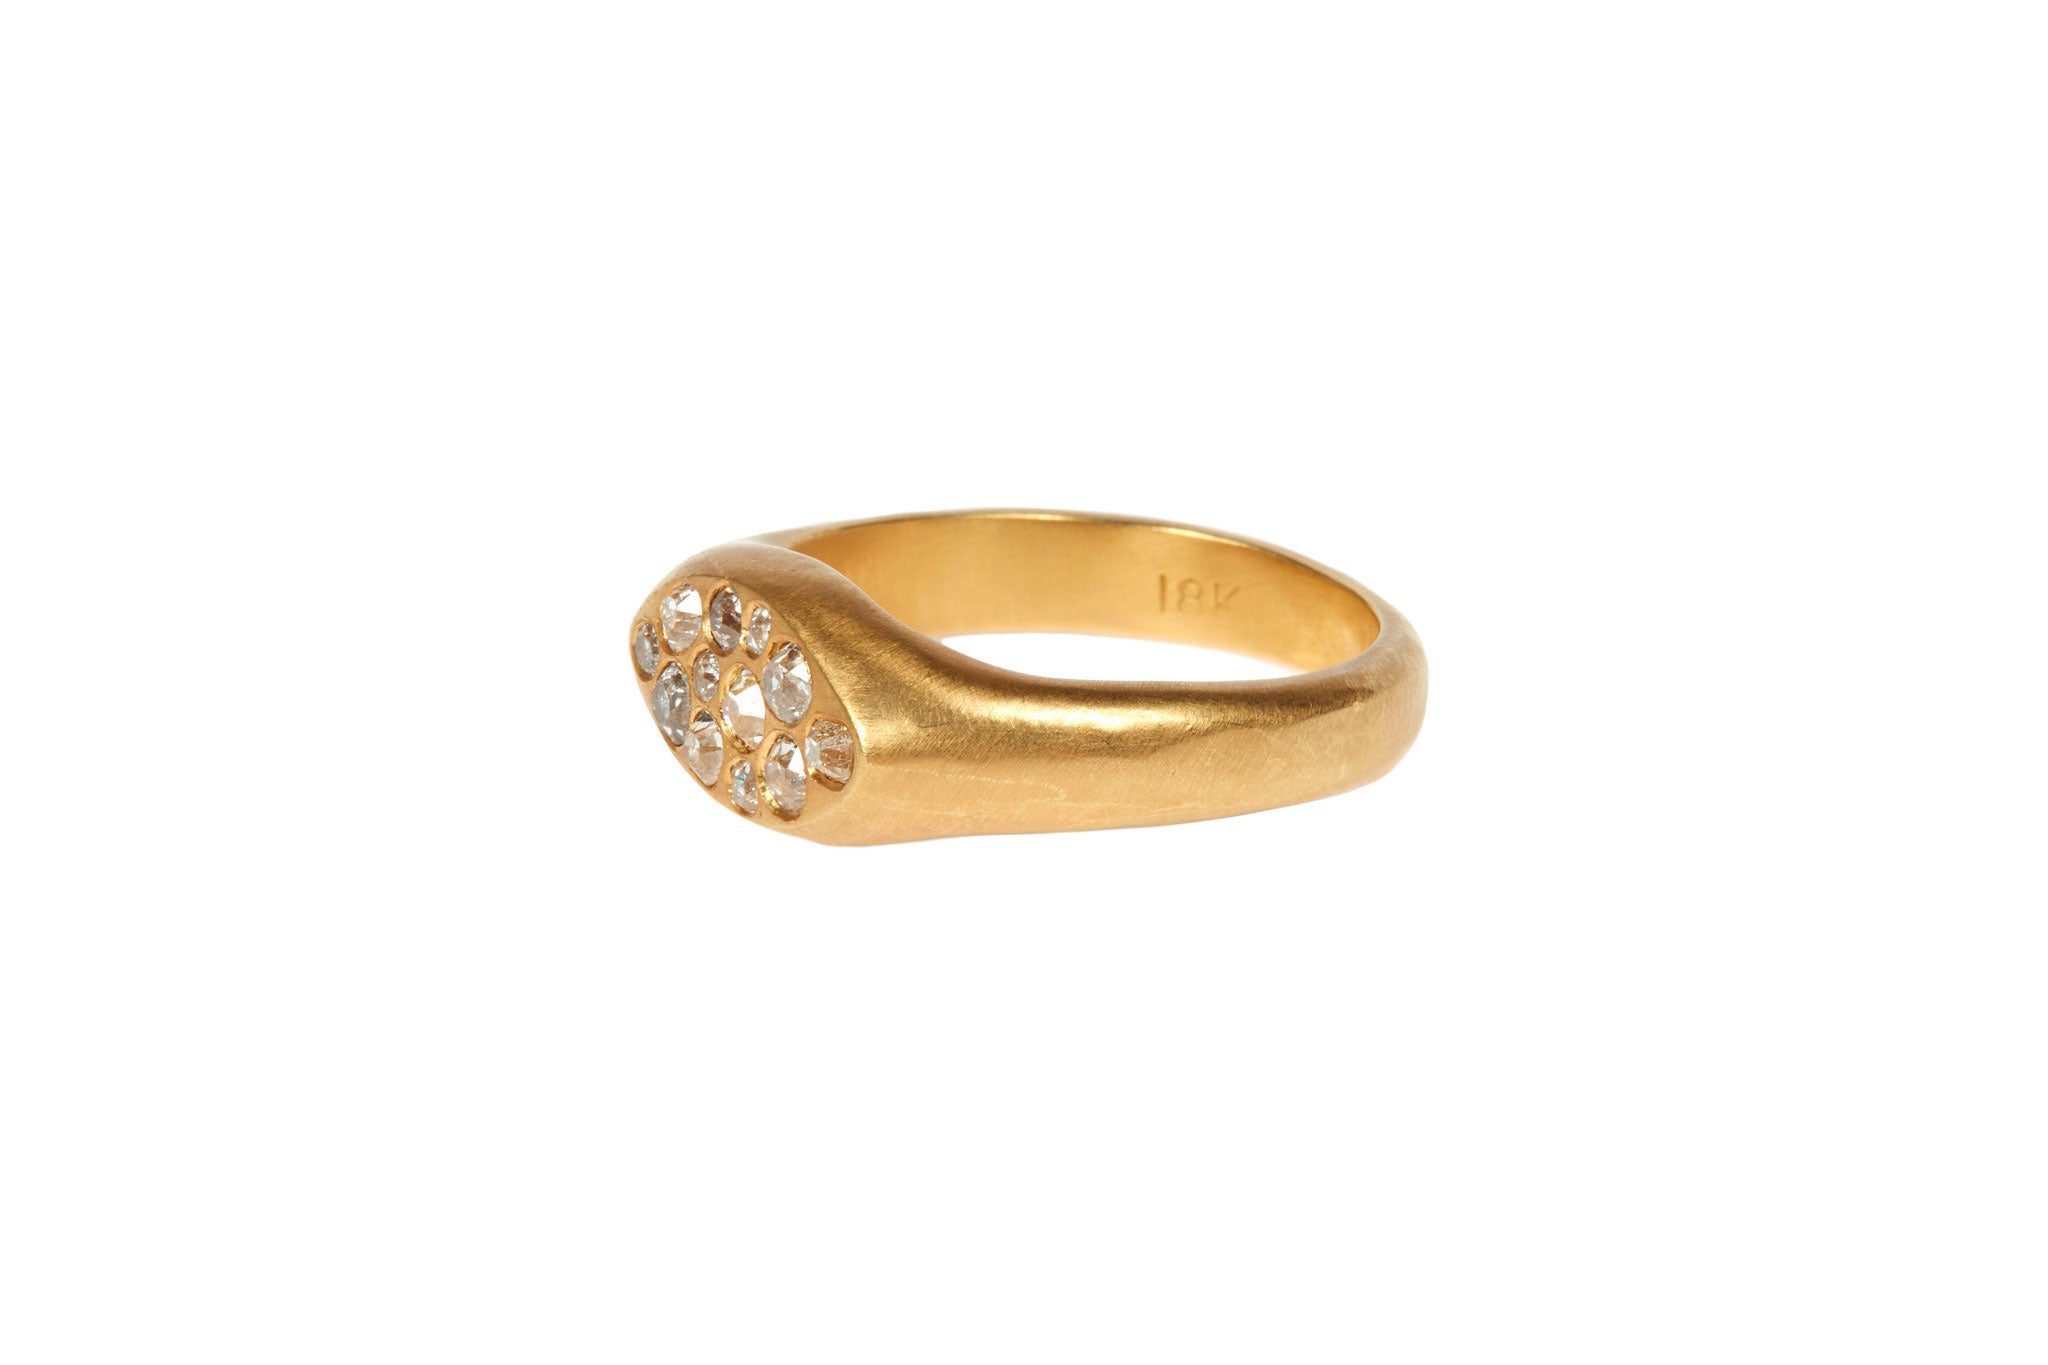 darius jewels hand made fine jewelry diamond signet ring v.2 18k yellow gold antique old mine cut diamonds darius khonsary